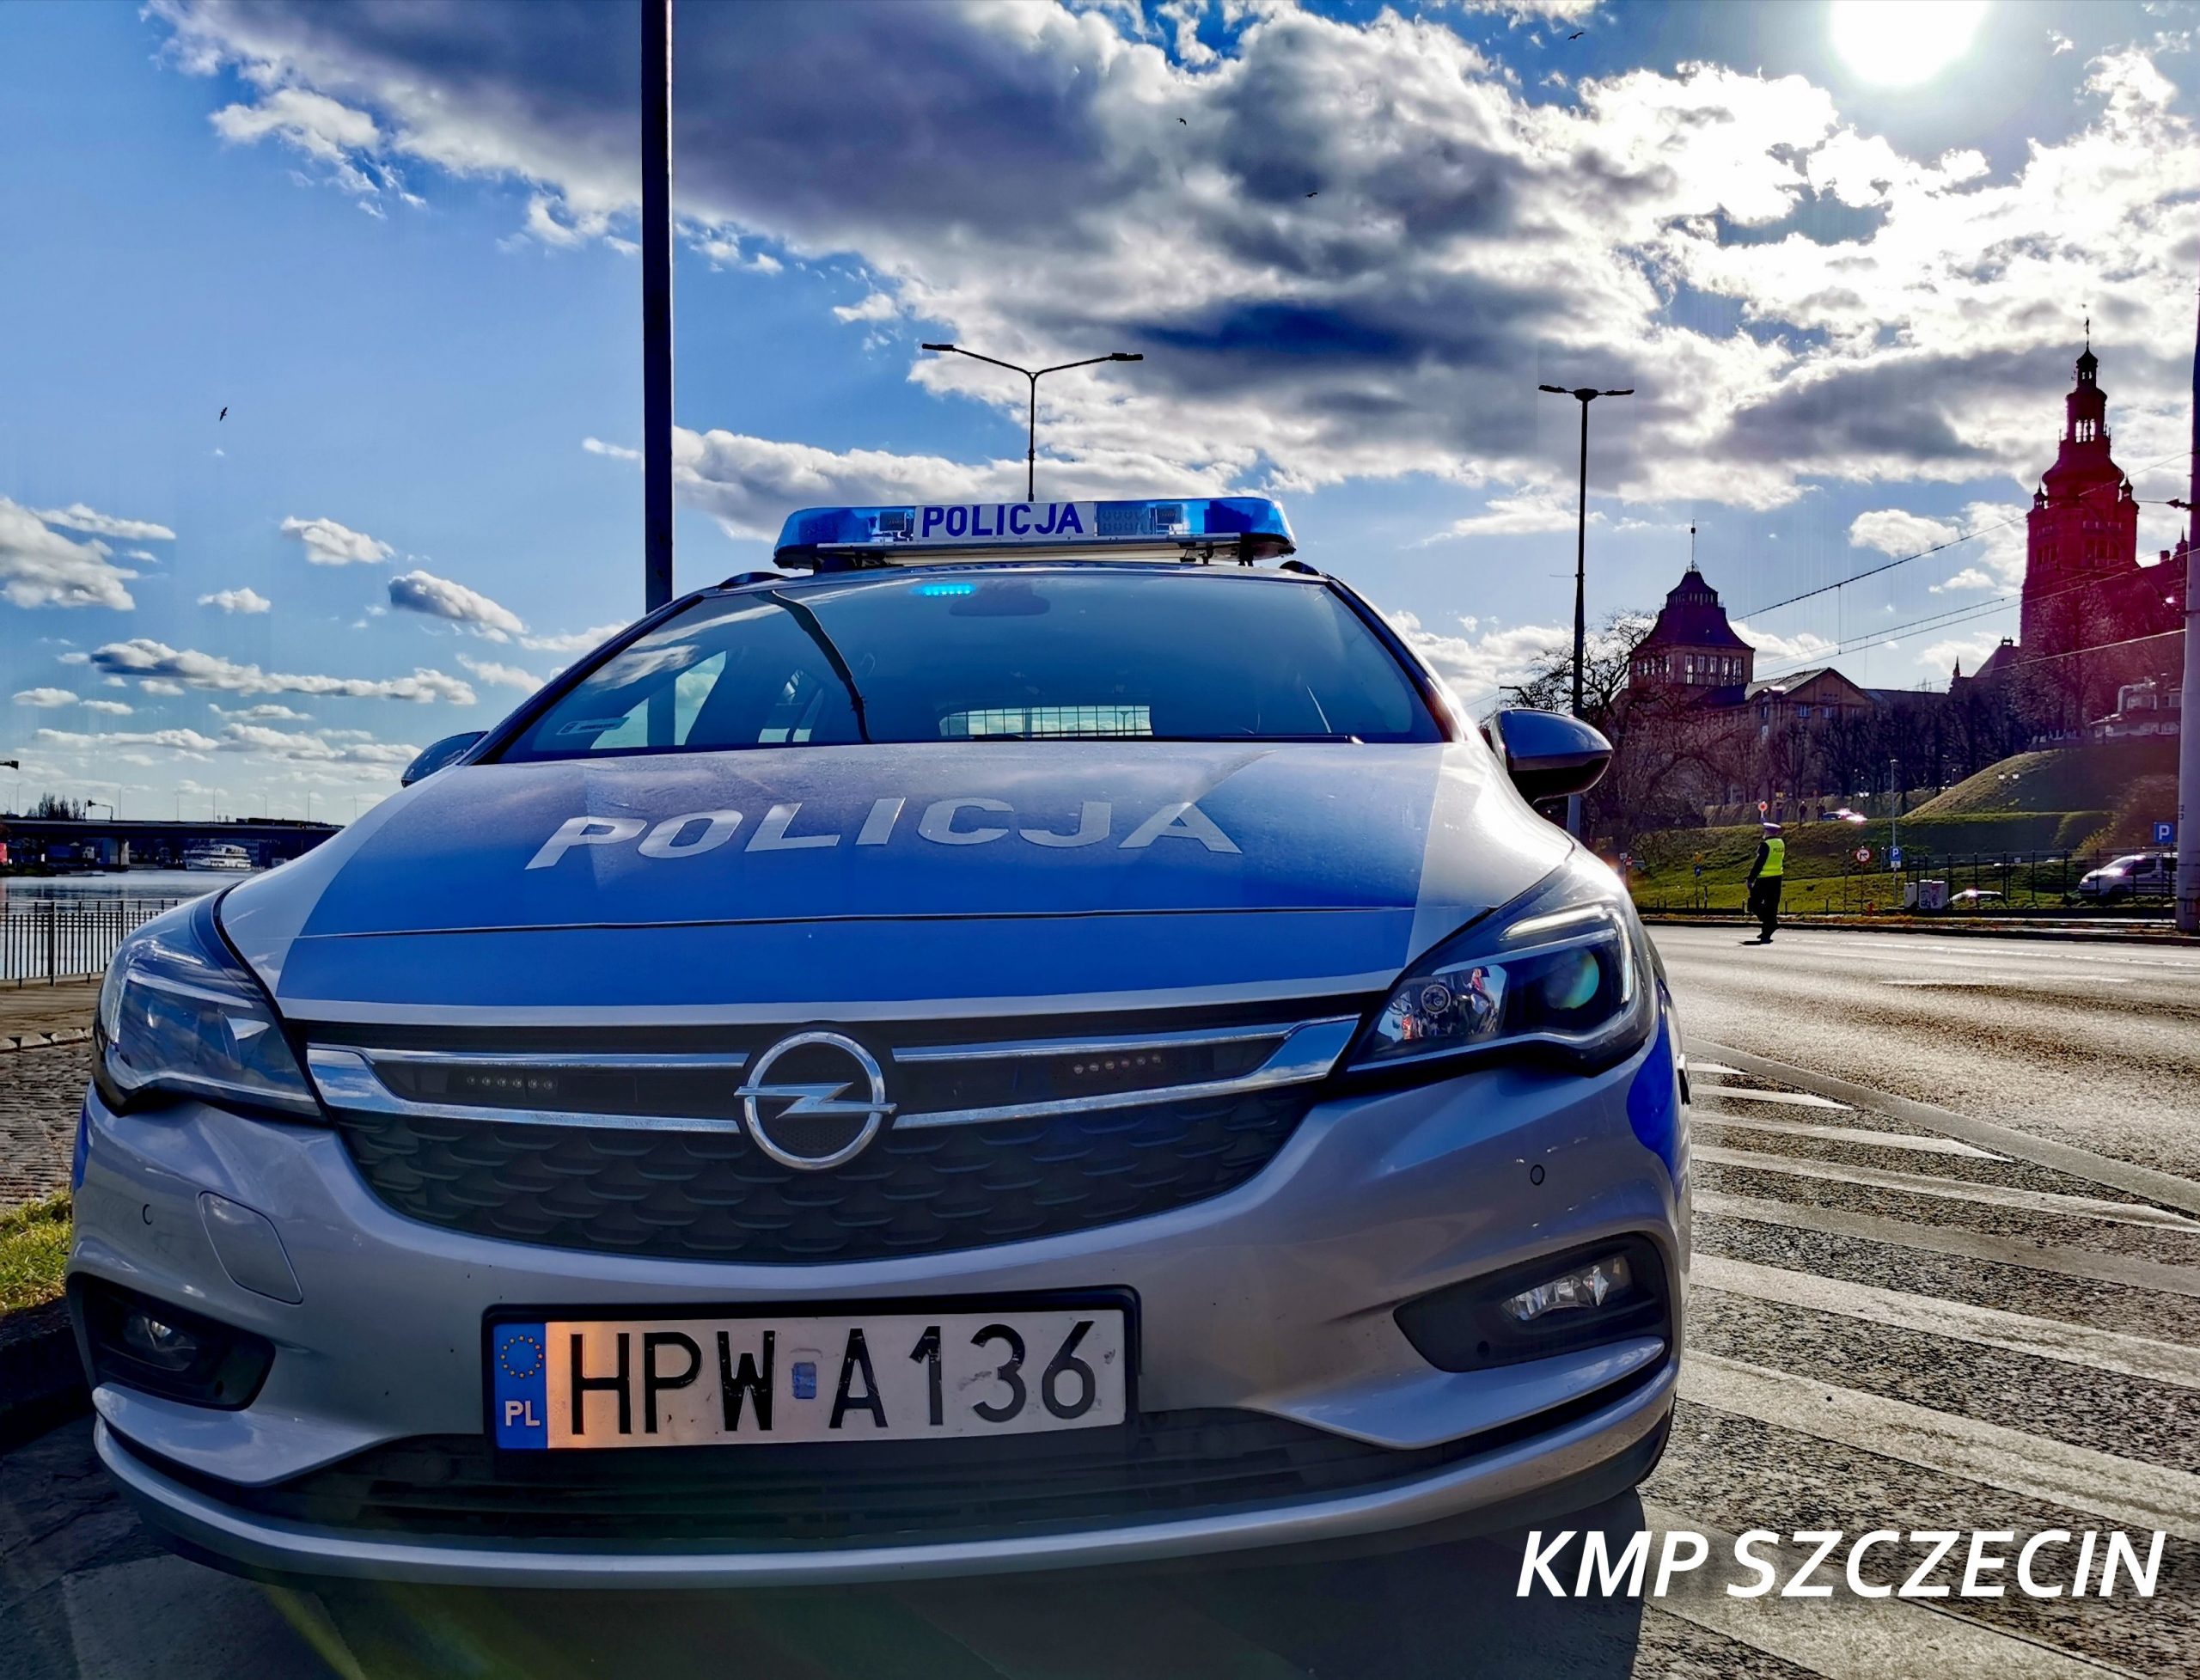 Policja Szczecin